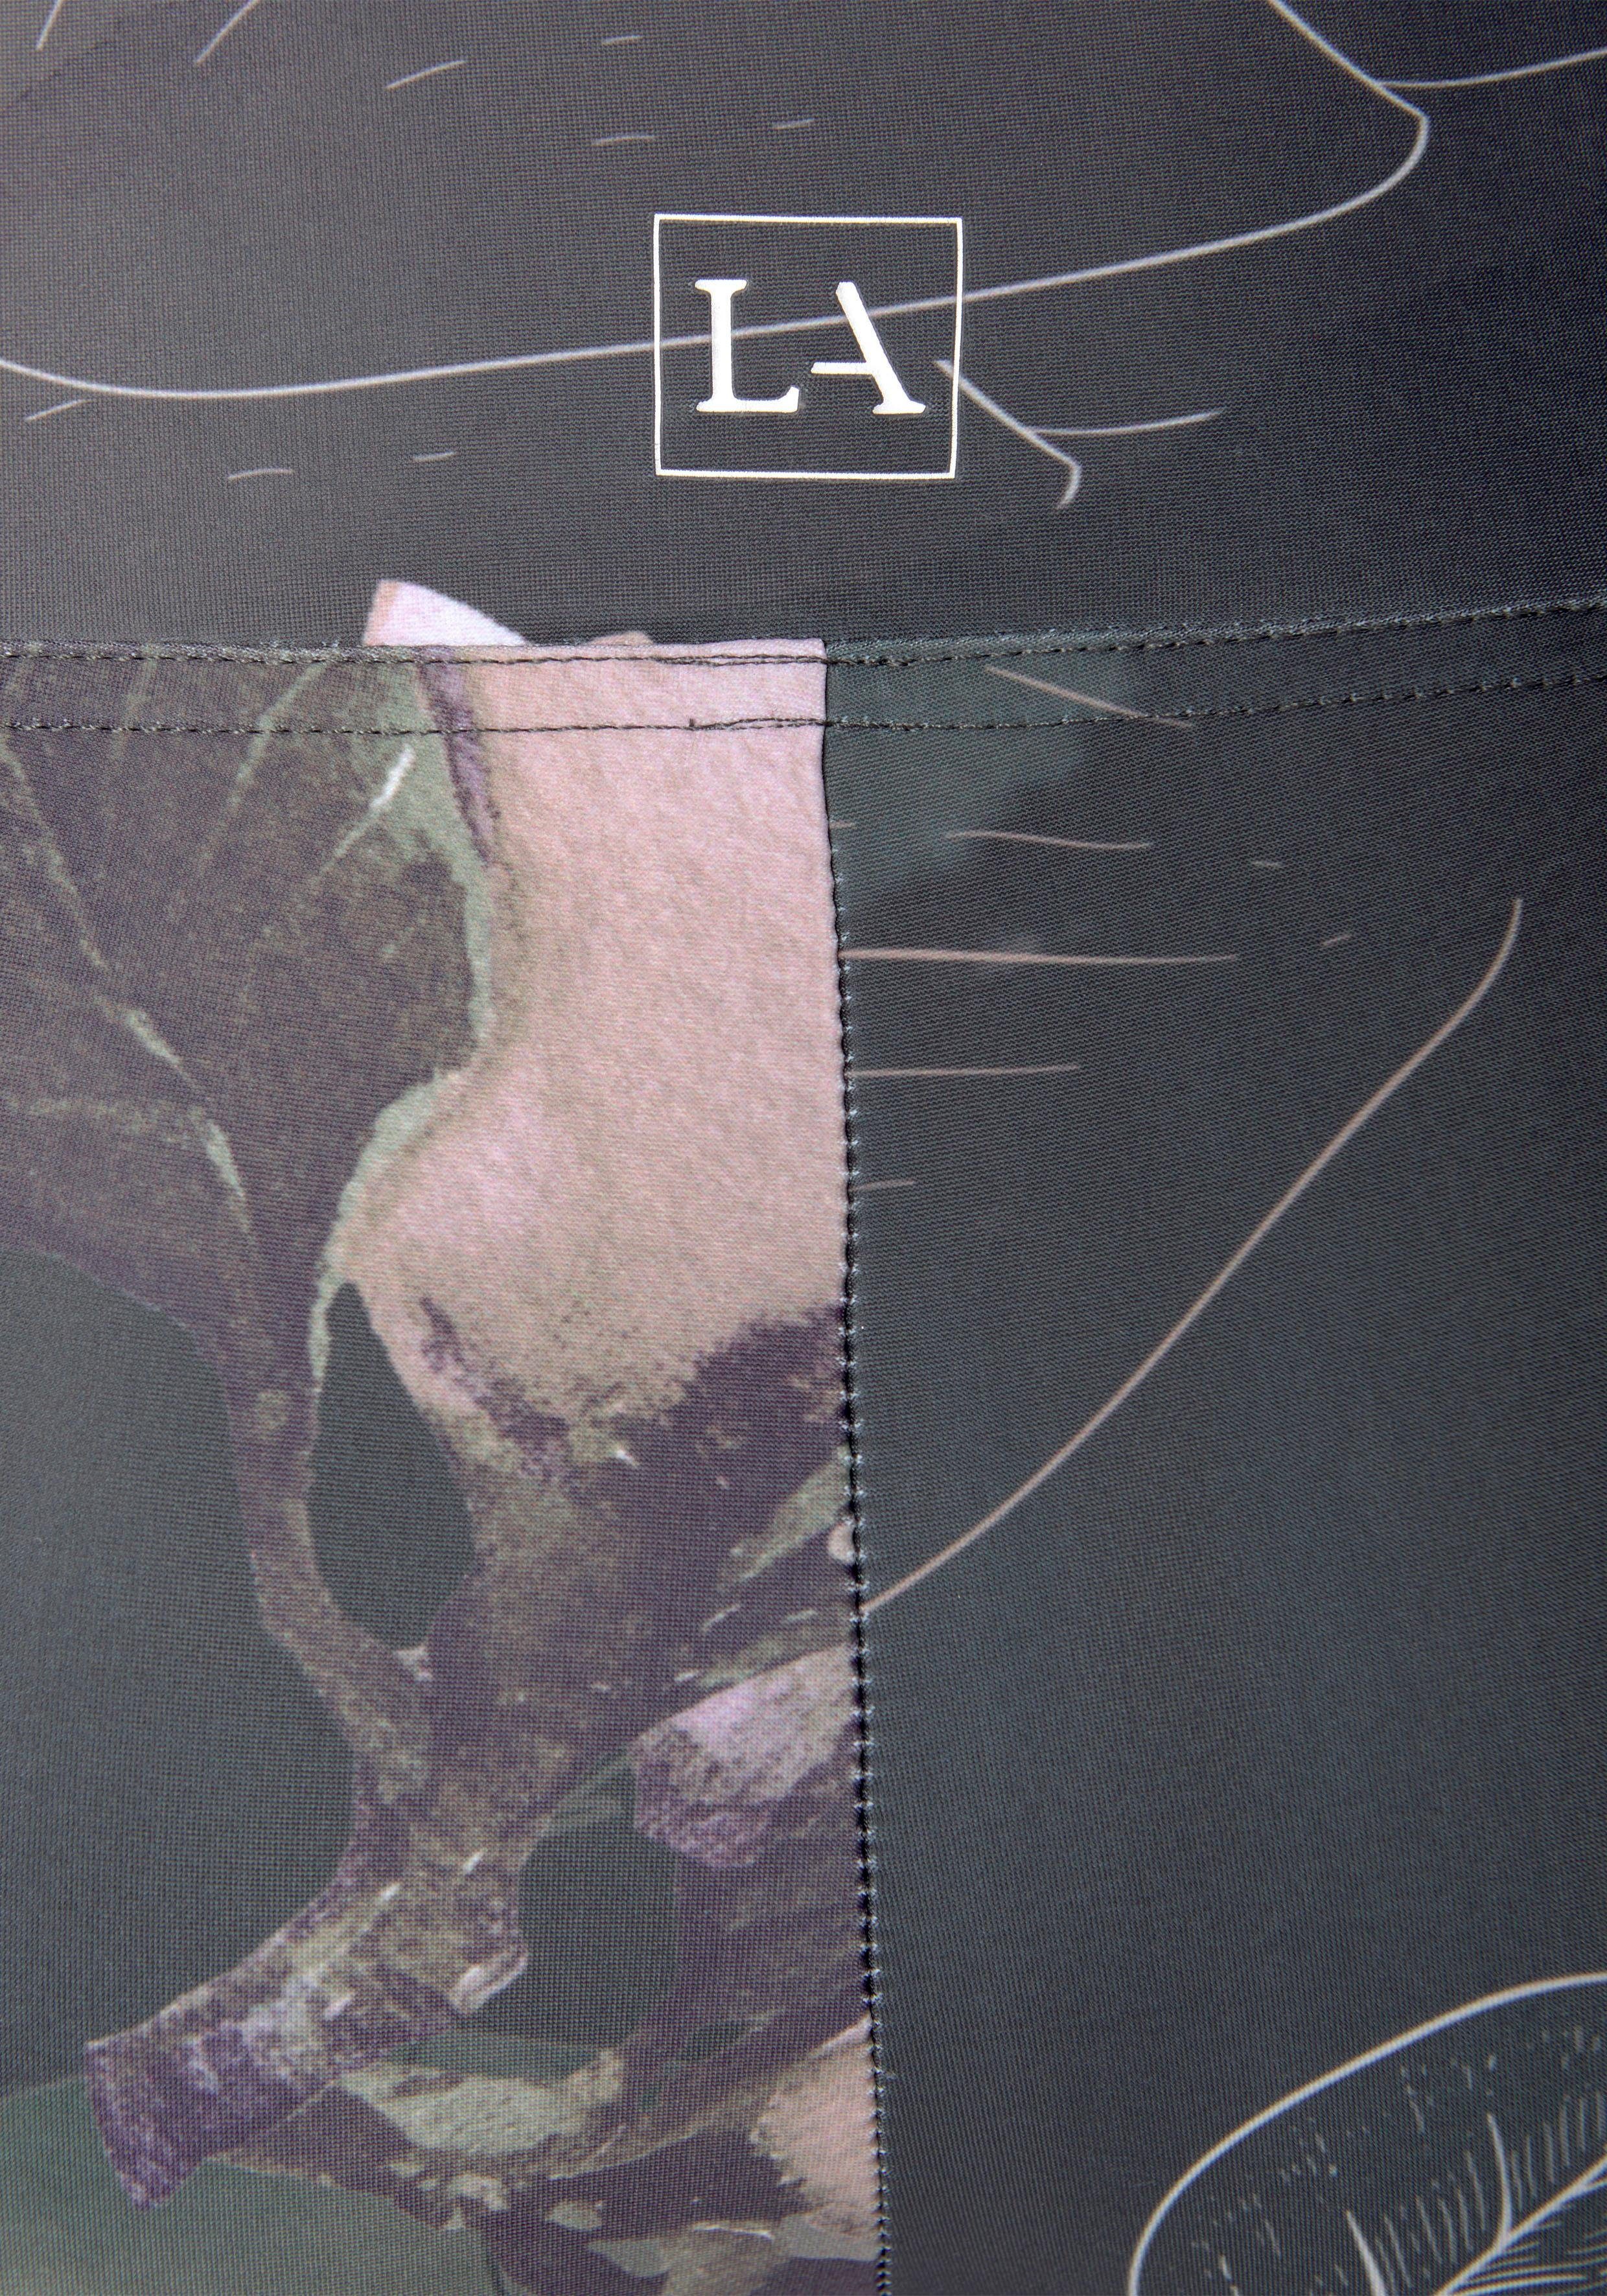 LASCANA ACTIVE Leggings Tropical Blumenprint, abstraktem Loungewear mit